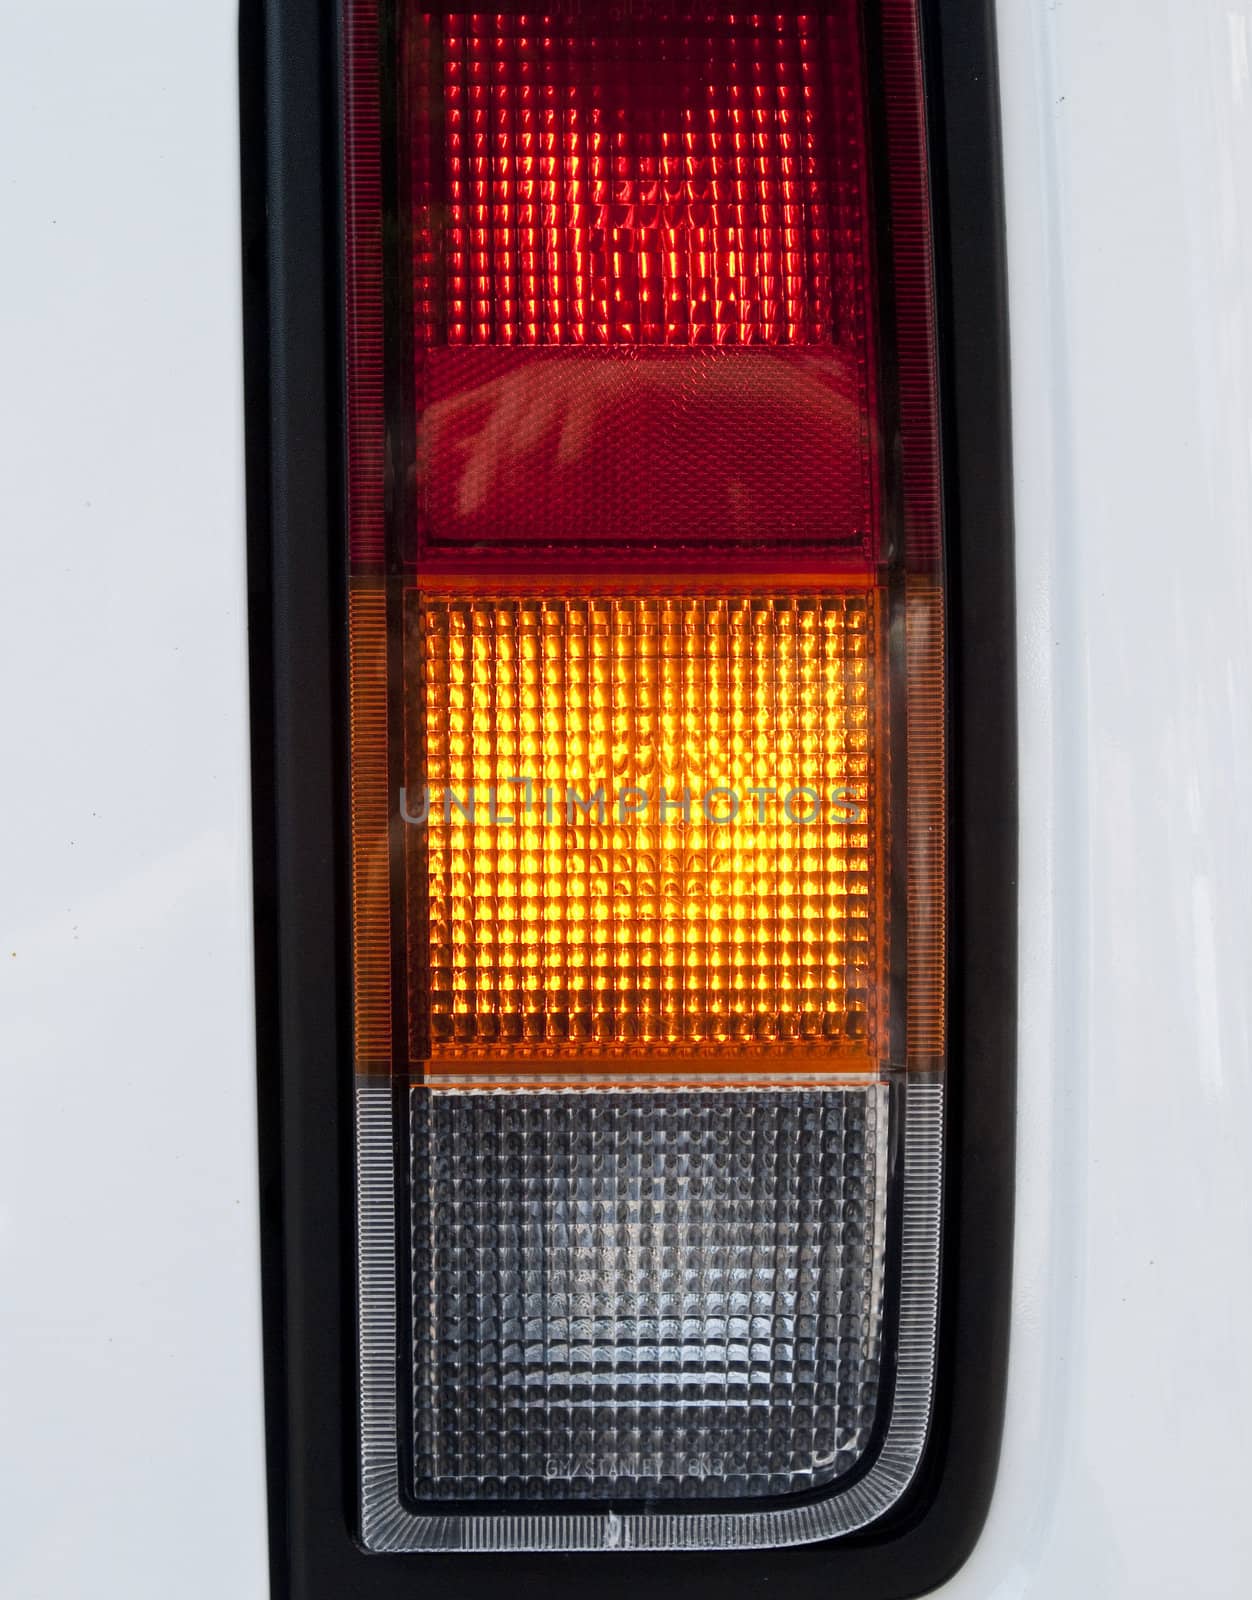 Modern car headlight - red, yellow, green